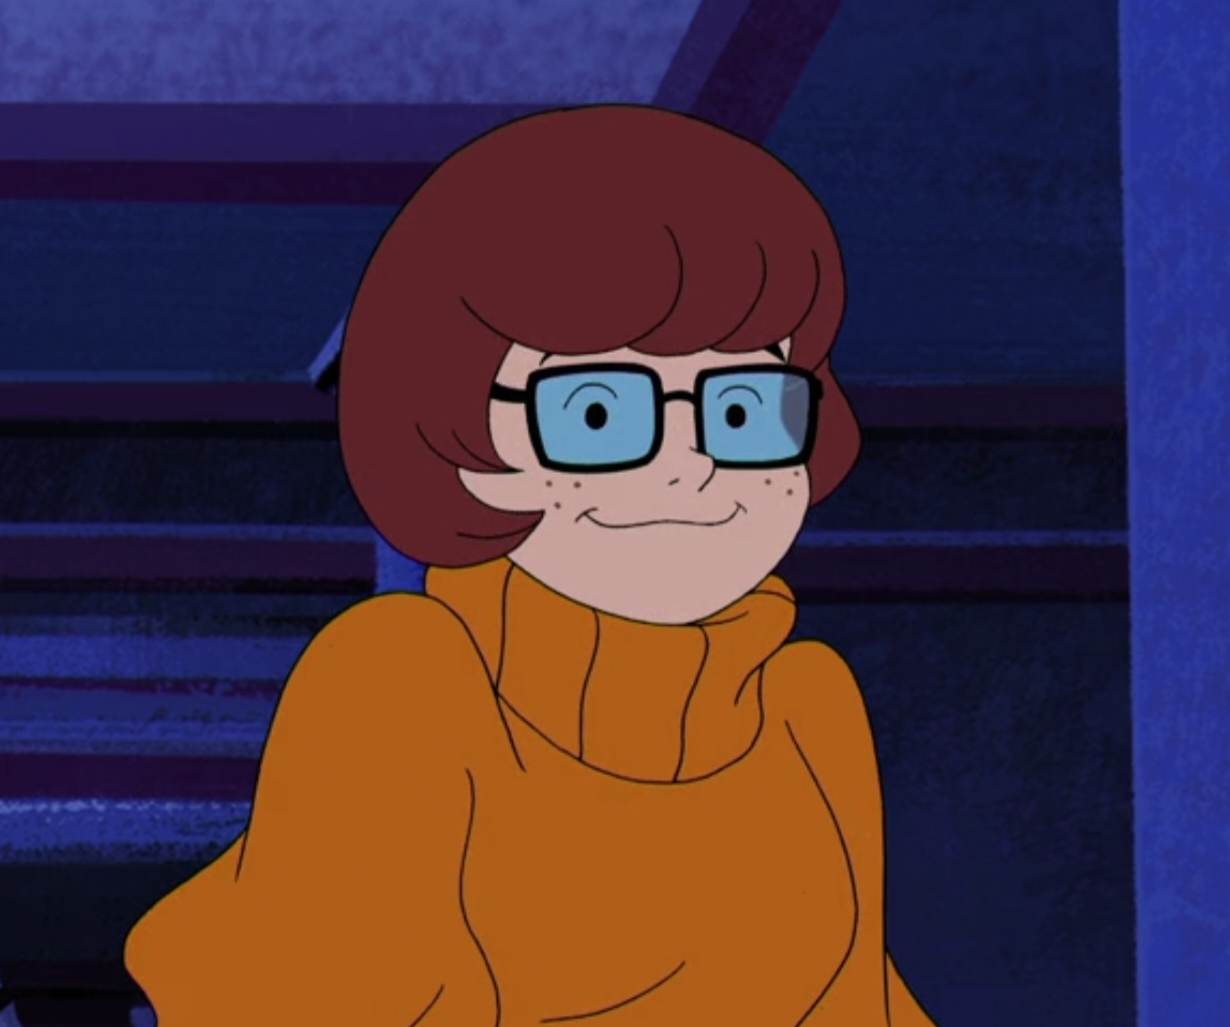 Velma Dinkley, LGBT Characters Wikia